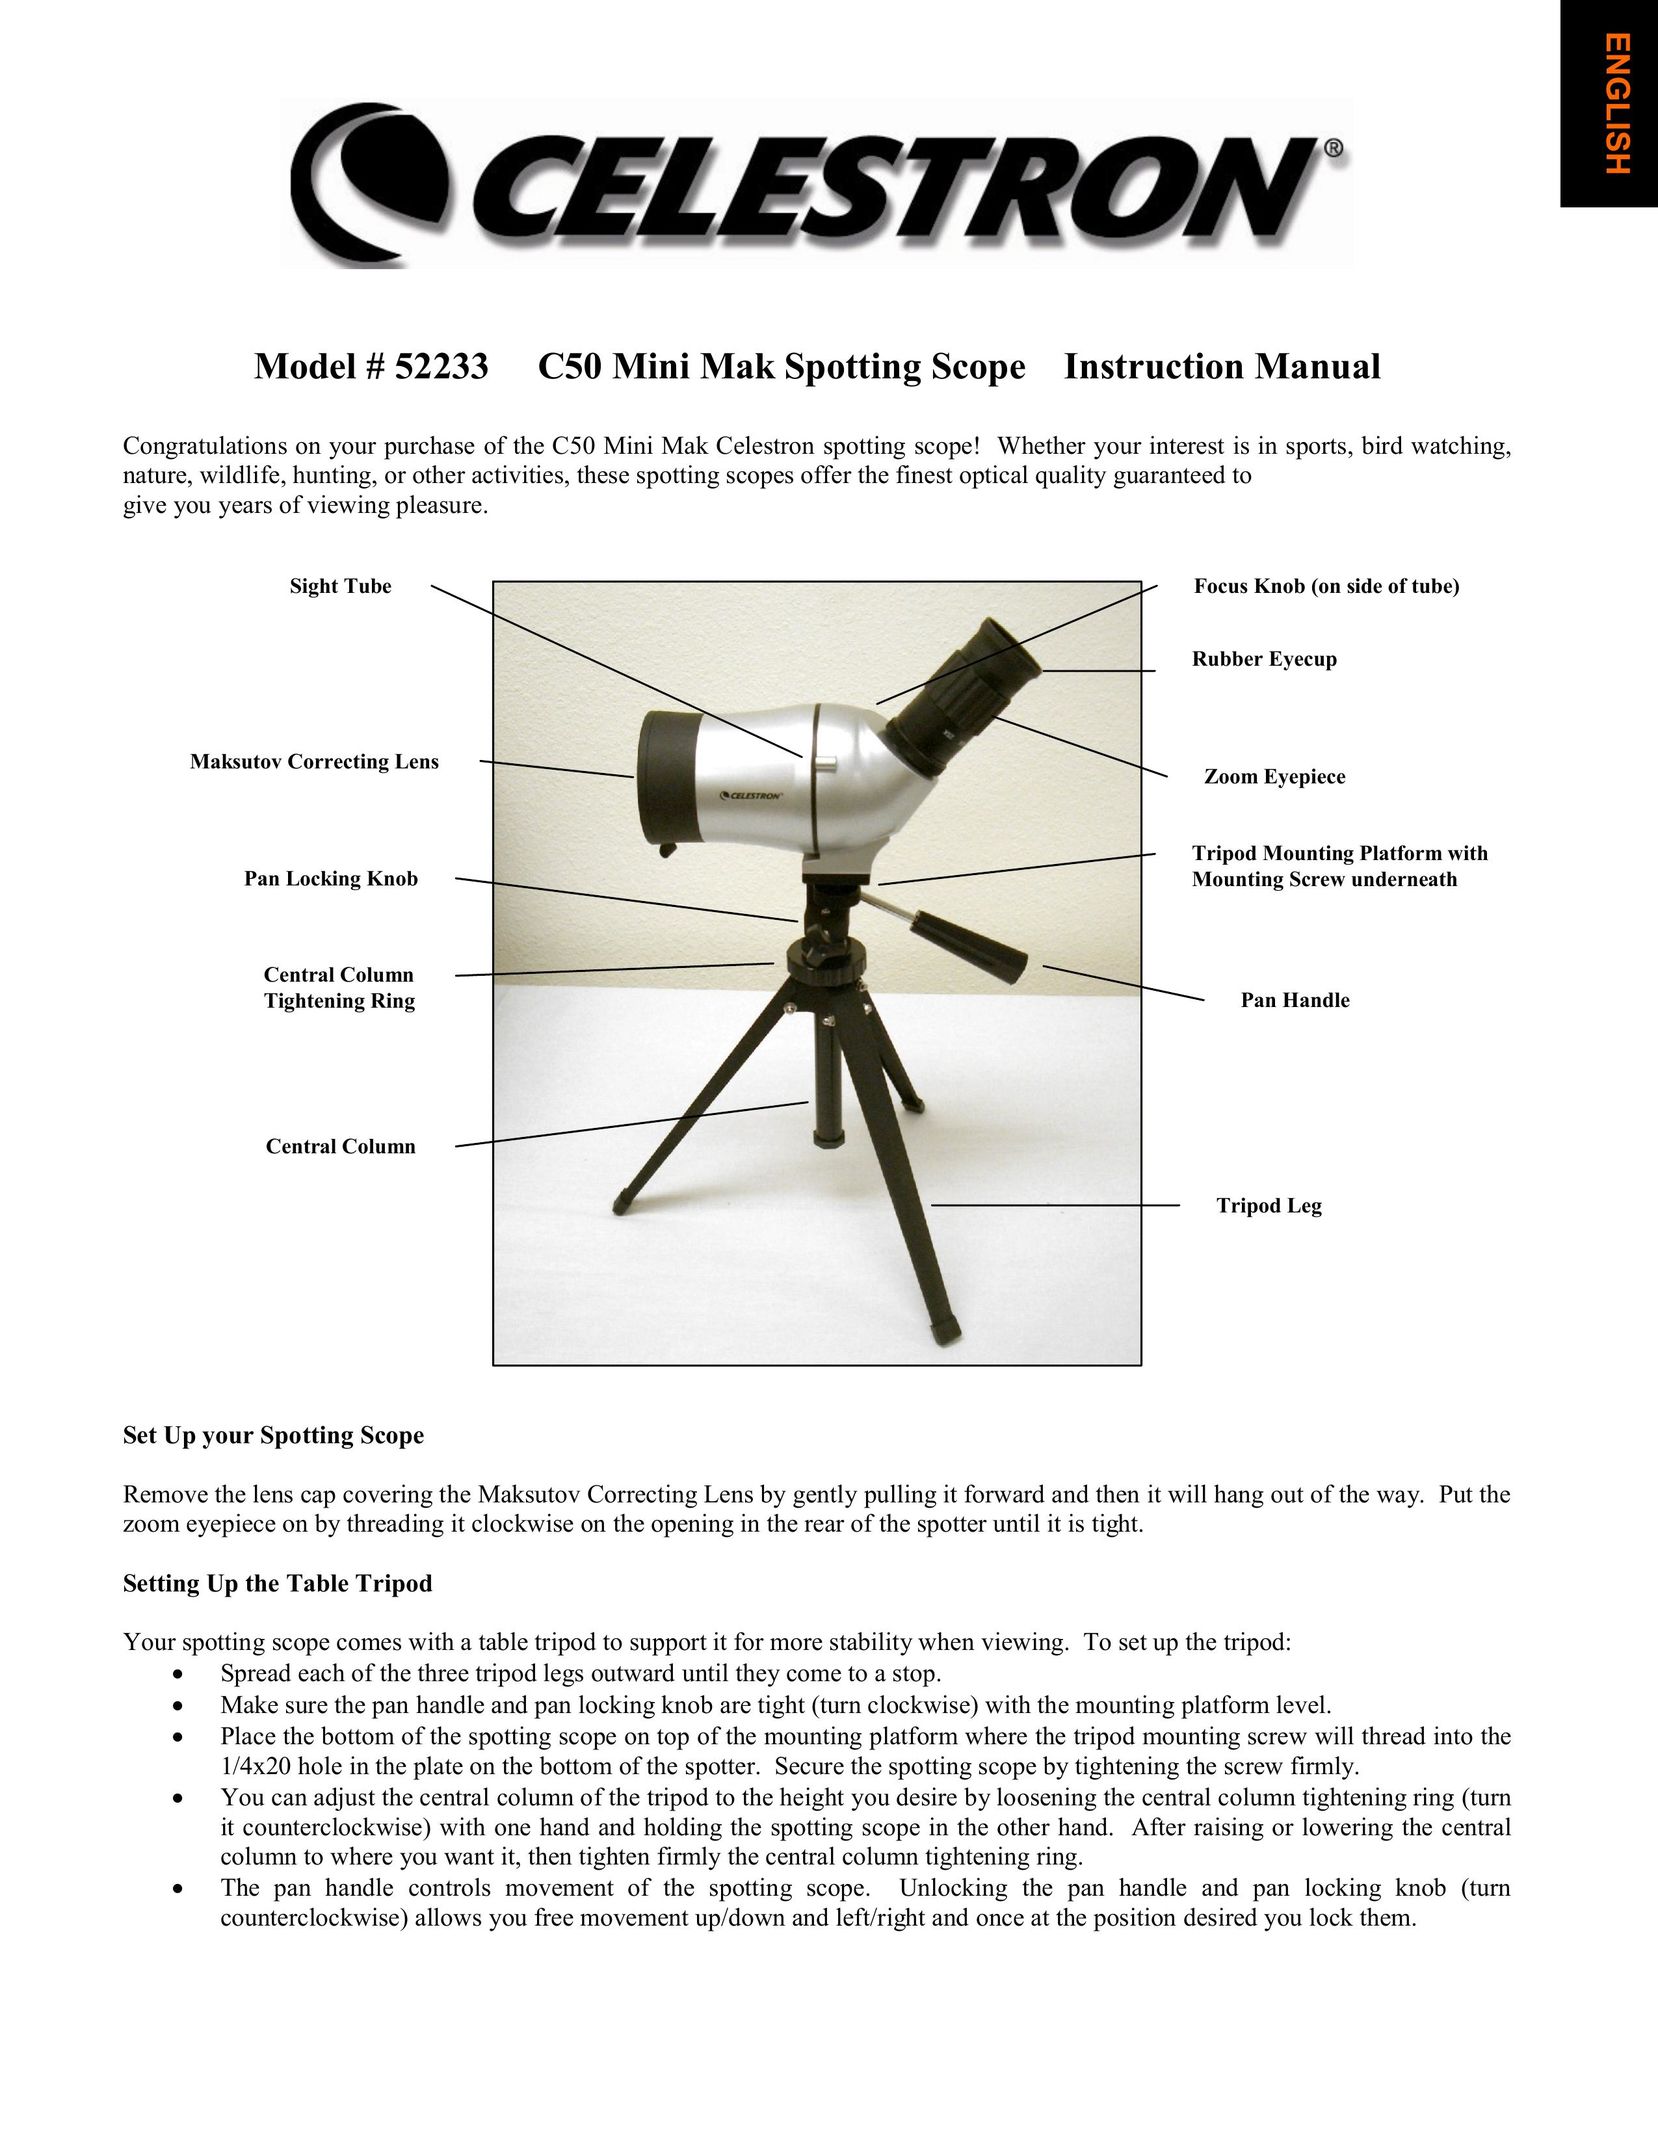 Celestron 52233 Hunting Equipment User Manual